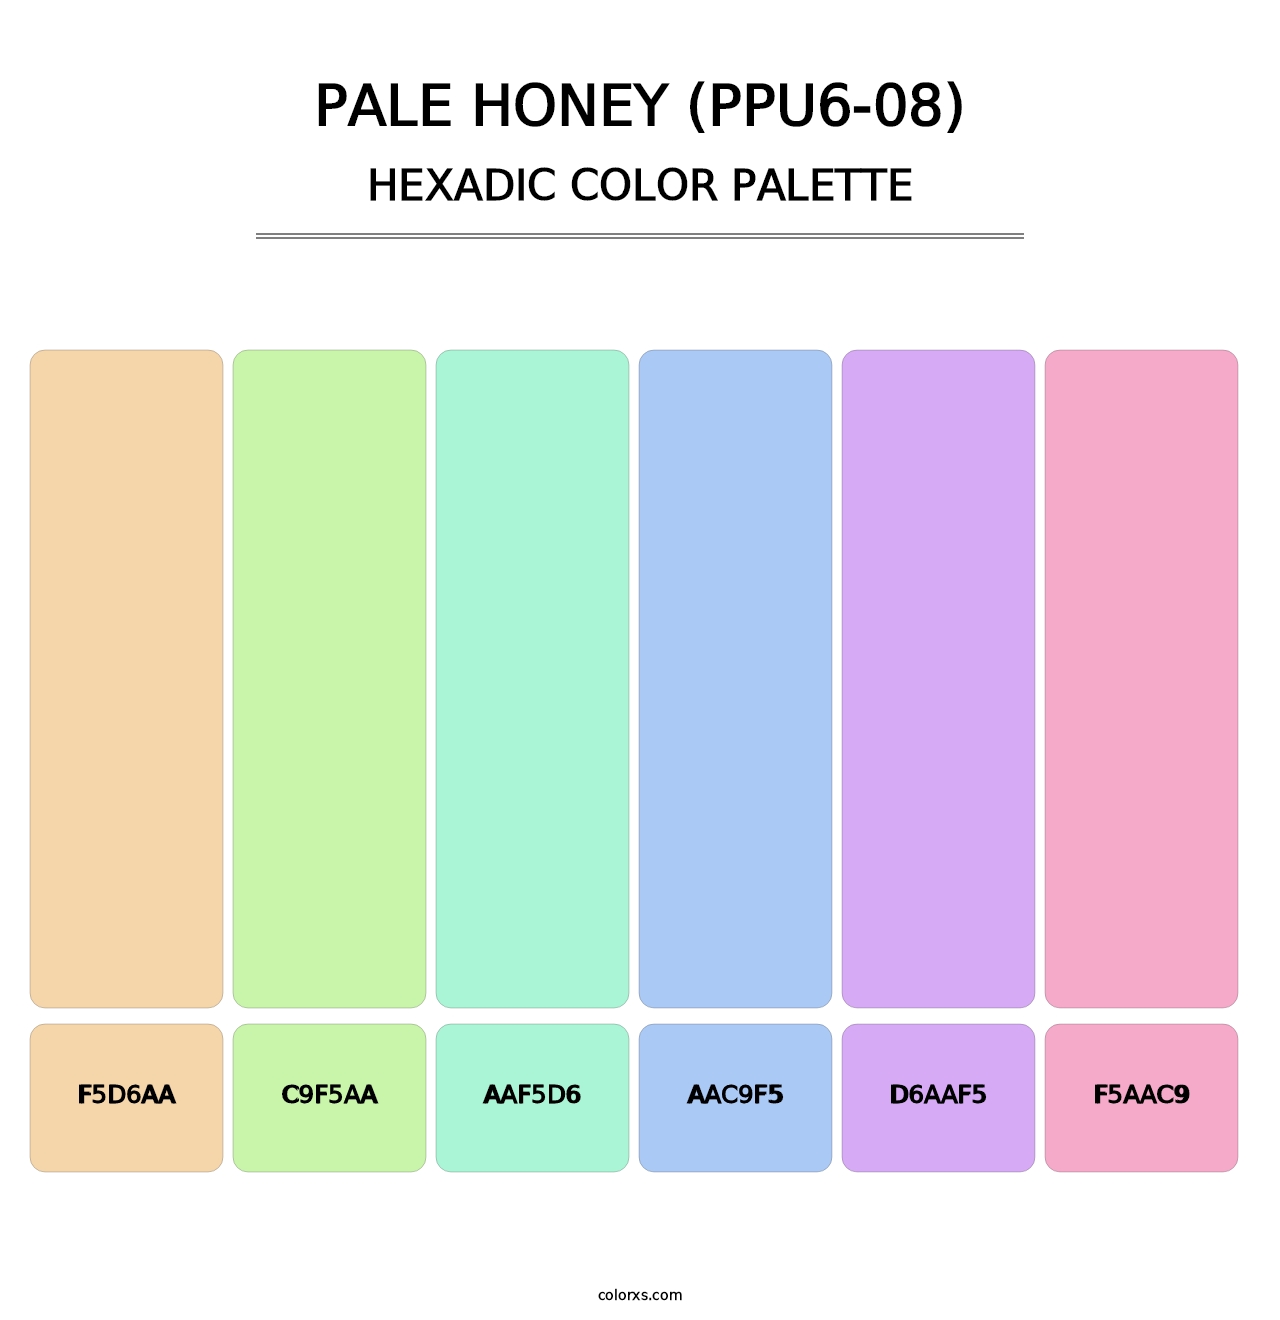 Pale Honey (PPU6-08) - Hexadic Color Palette